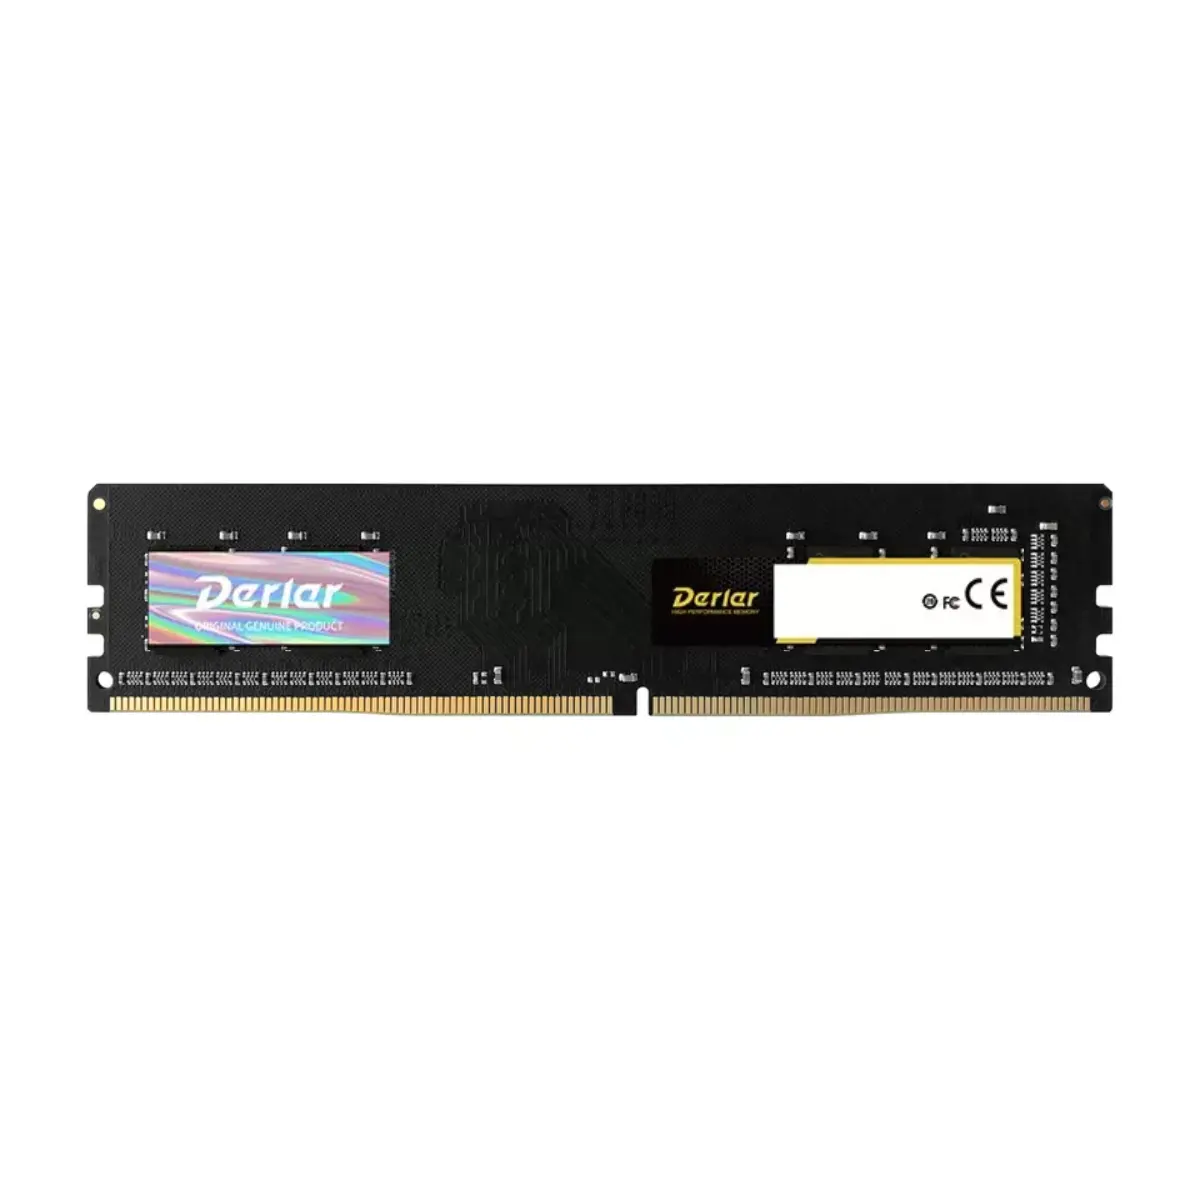 Oem Factory Price Desktop Memory Ram DDR Ecc DDR4 4GB 8GB 16GB 32GB 2666MHZ